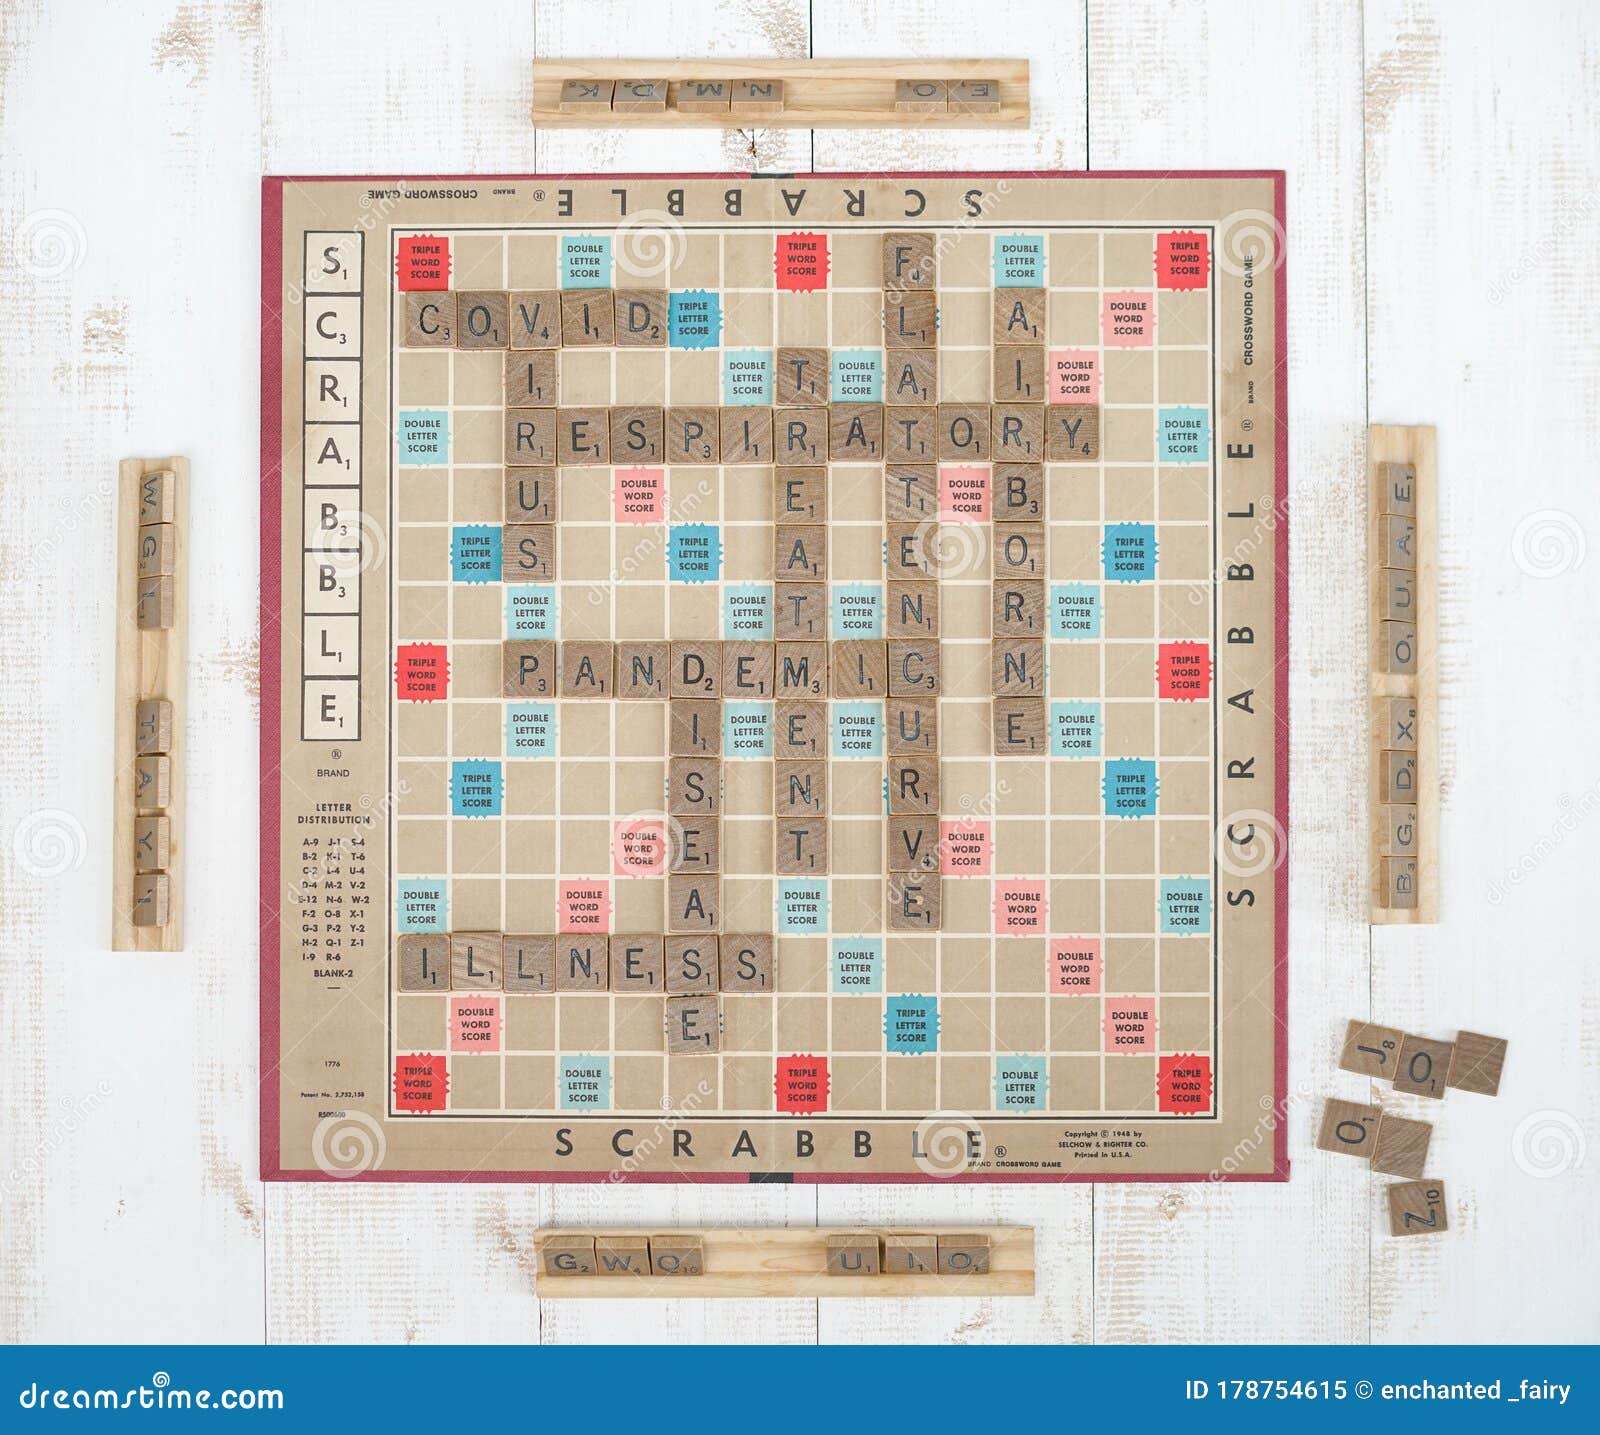 TILE LOCK SCRABBLE Crossword Game SEALED! Board Keeps Tiles In Place 